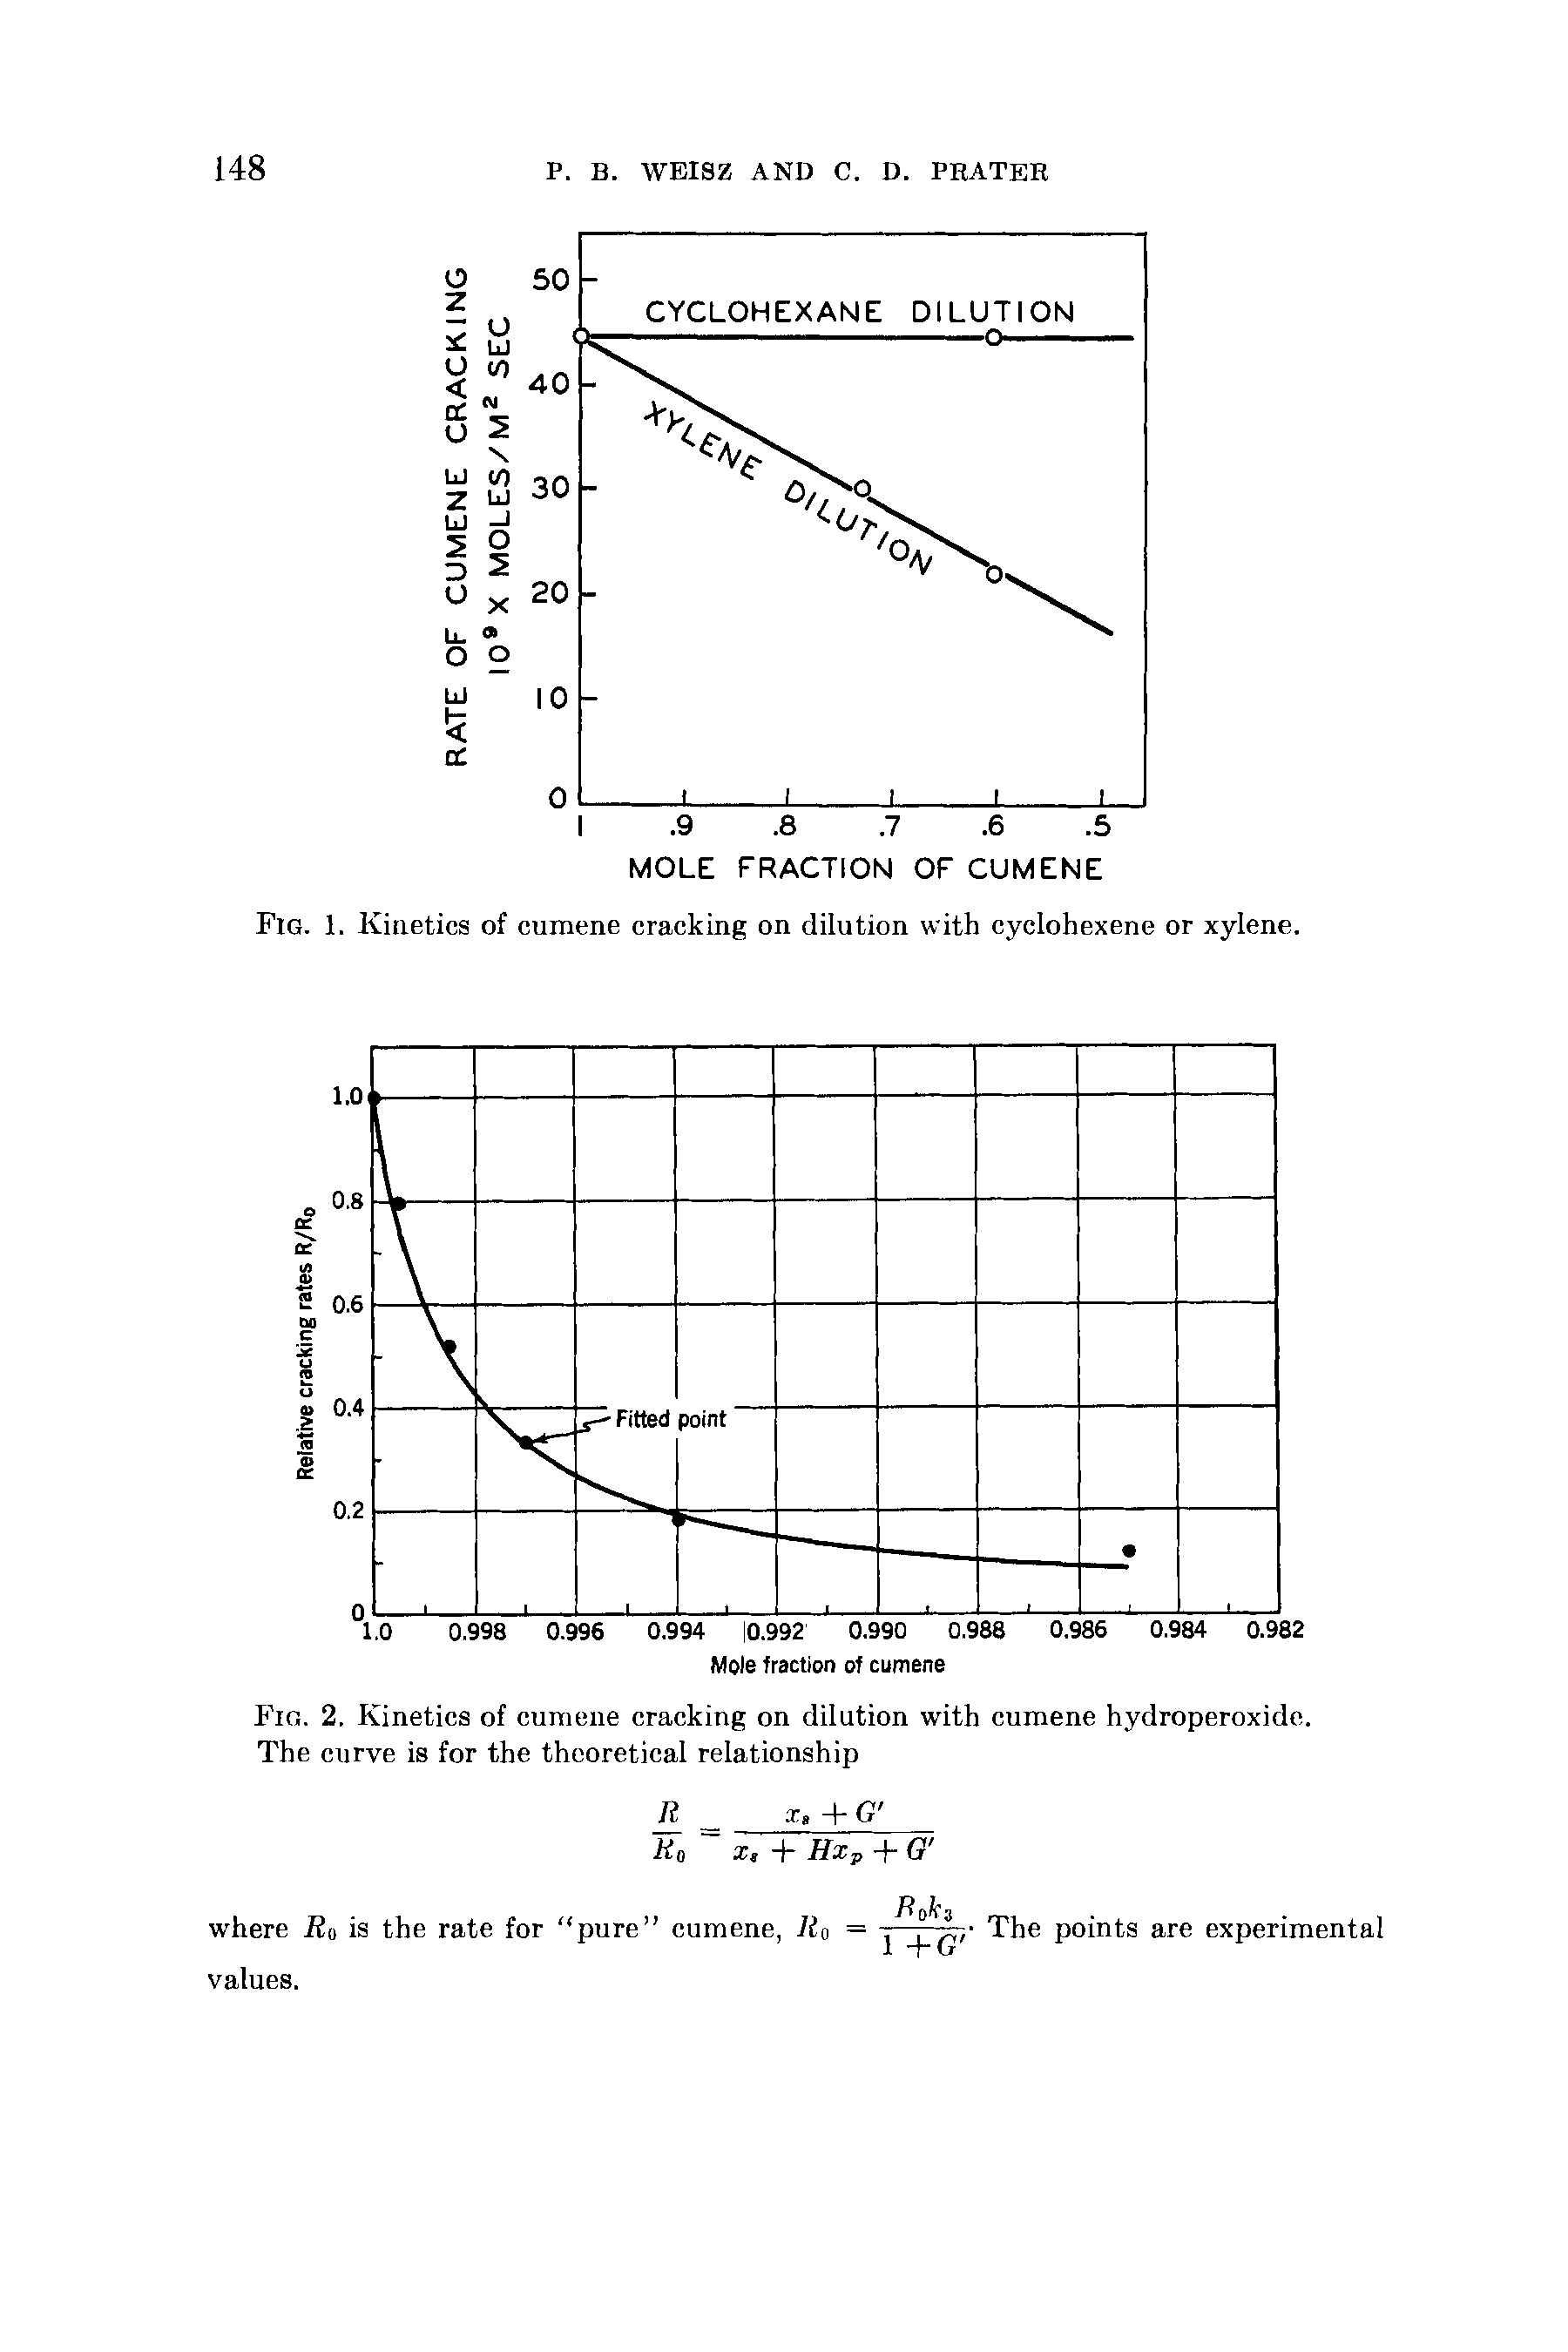 Fig. 1. Kinetics of cumene cracking on dilution with cyclohexene or xylene.